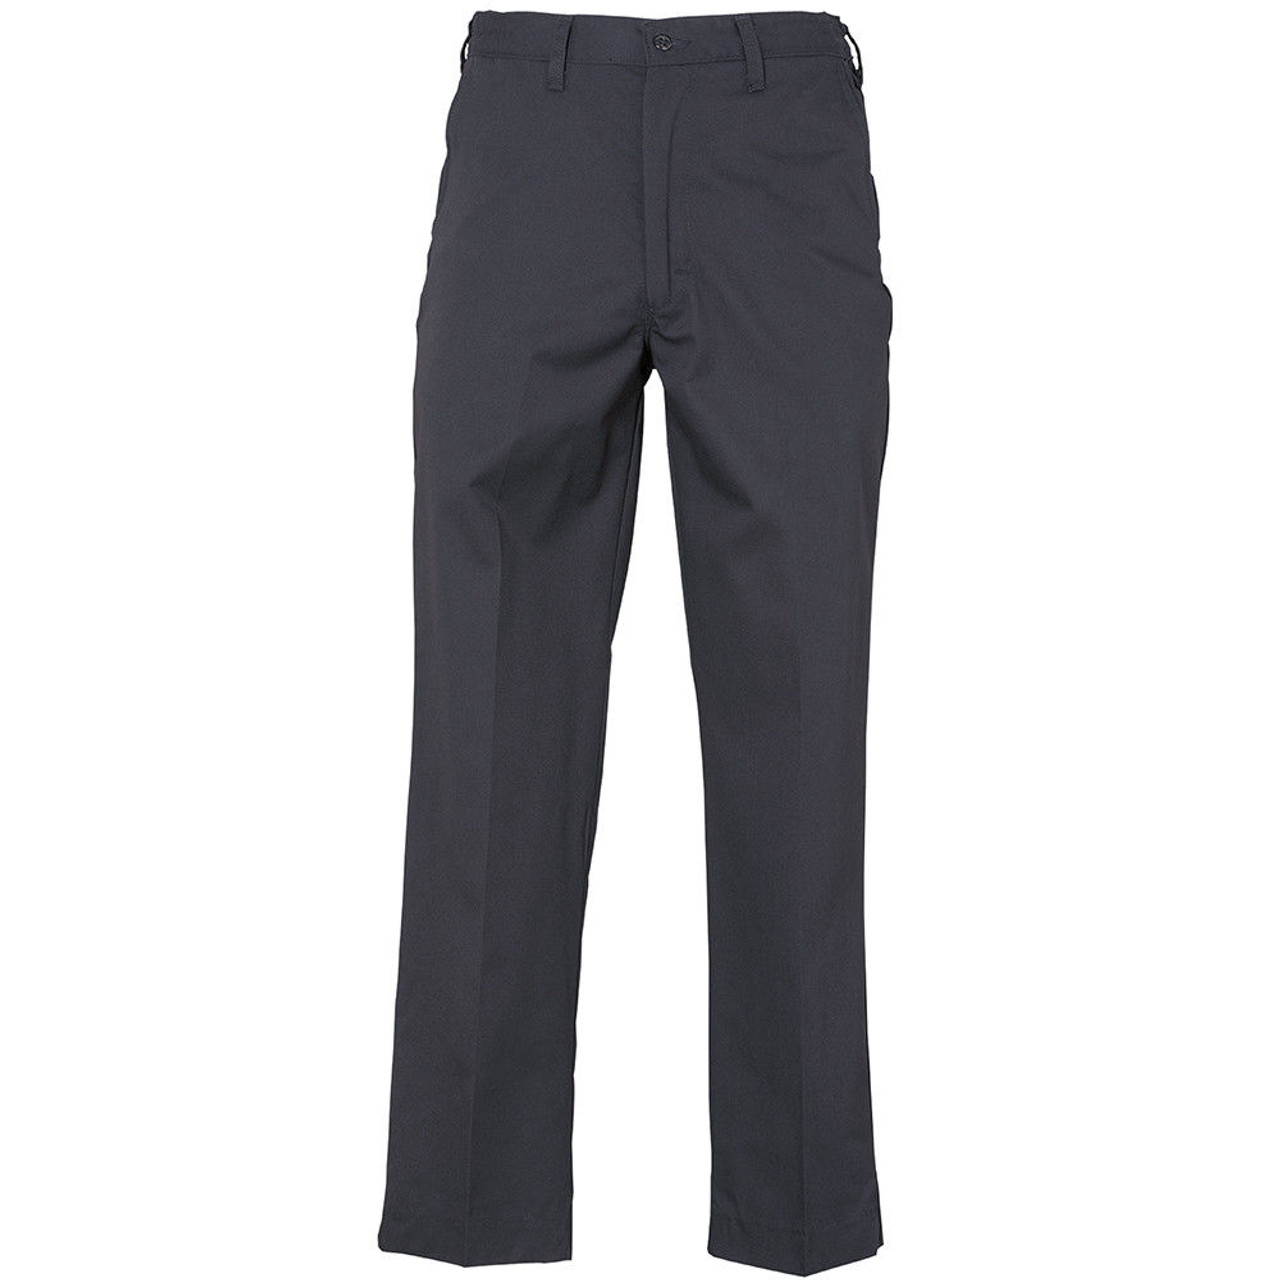 REEDFLEX® 100% Wrinkle Resistant Cotton Midnight Navy Work Pants, 321P